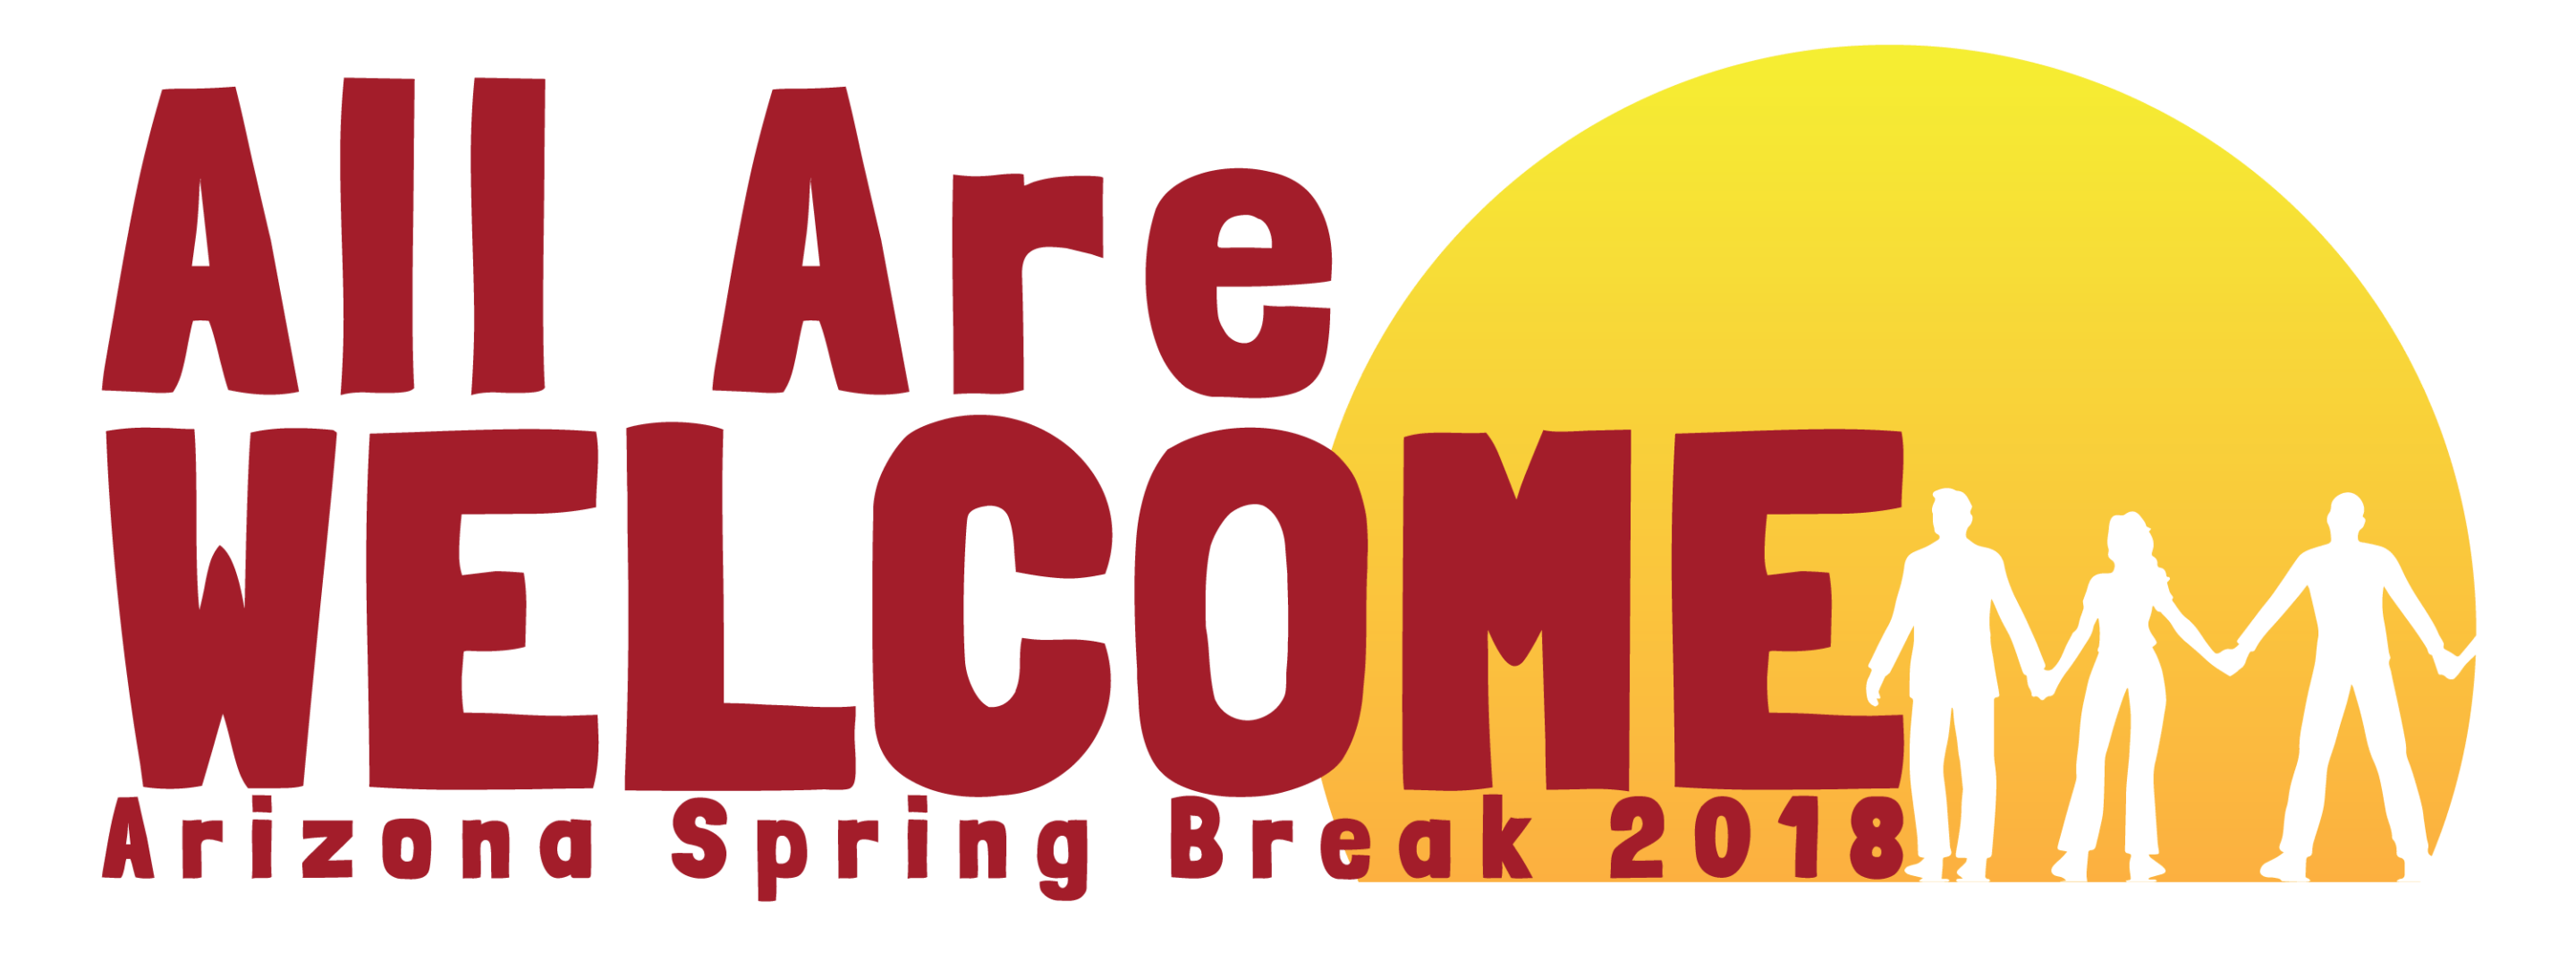 Spring Google Logo - AZ Spring Break 2018 - Logo & Vector Files - AZ Spring Break 2018